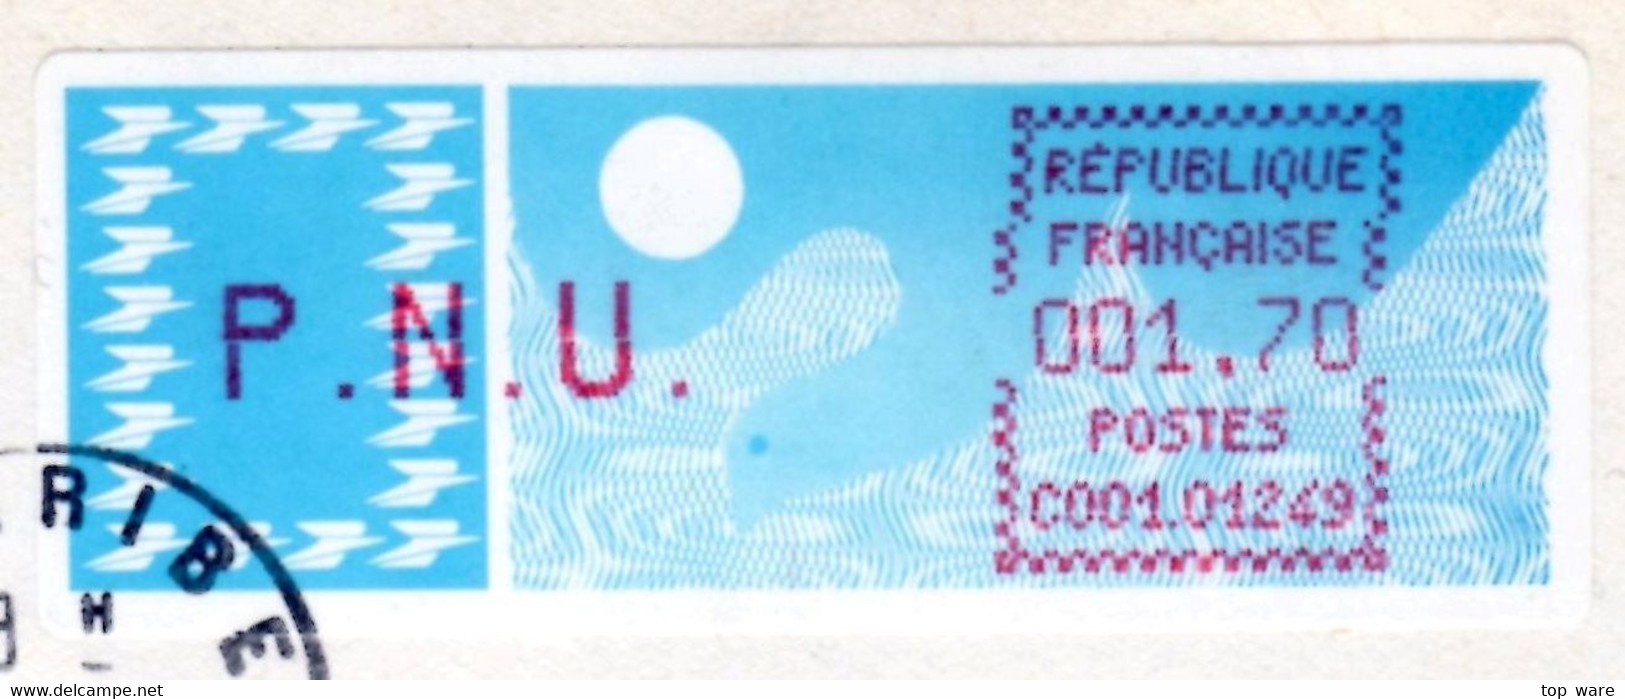 France LSA ATM Stamps C001.01249 / Michel 6.3 Zd / PNU 1,70 On Cover 2.4.1985 Miribel / Distributeurs Automatenmarken - 1985 « Carrier » Paper